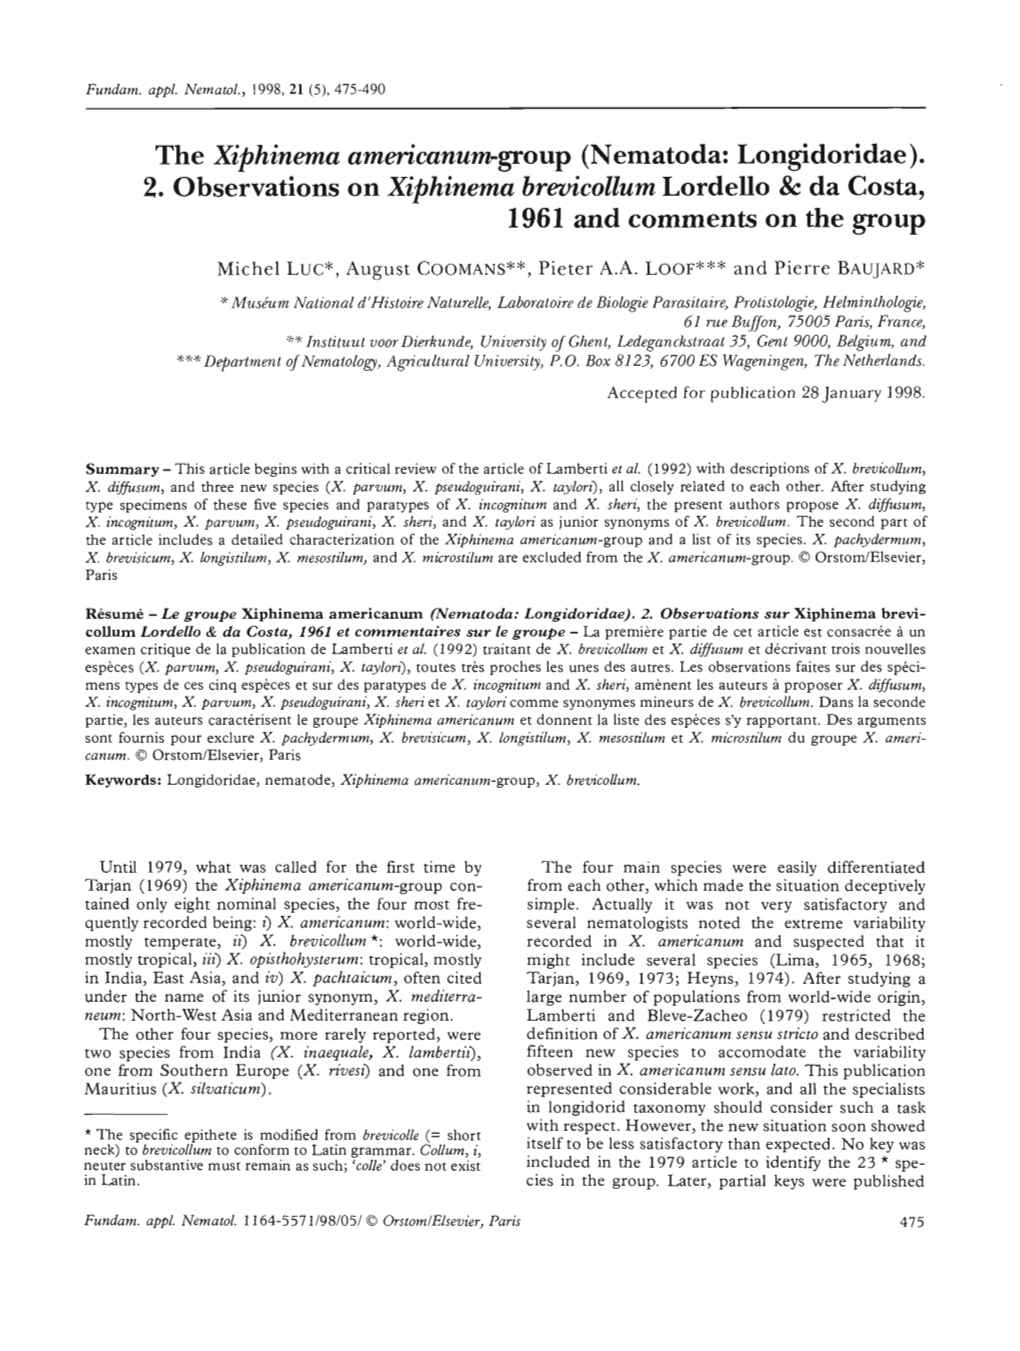 The Xiphinema Americanum-Group (Nematoda : Longidoridae) : 2. Observations on Xiphinema Brevicollum Lordello and Da Costa, 1961